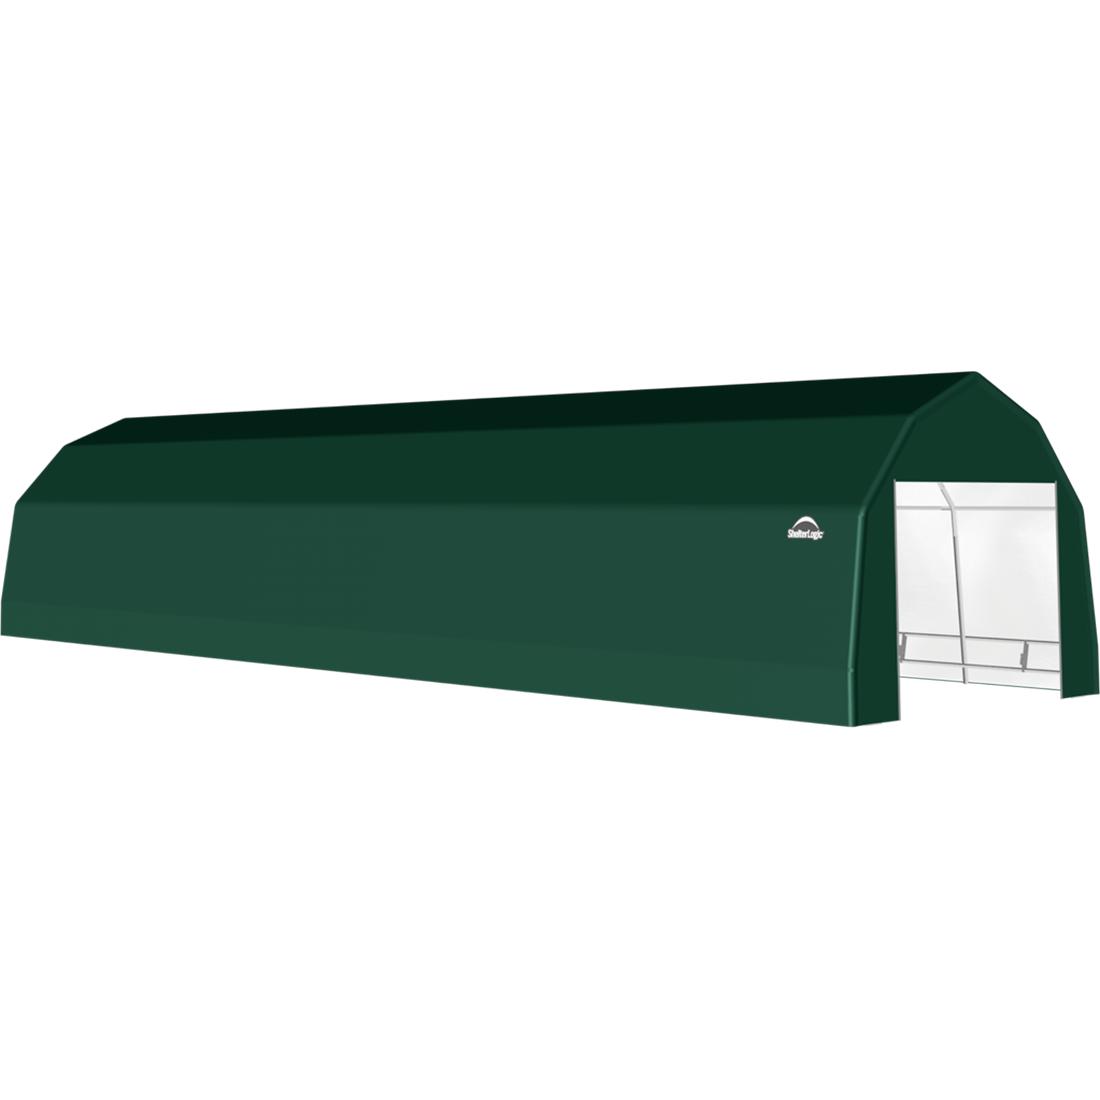 ShelterTech SP Series Barn Shelter, 12 ft. x 36 ft. x 9 ft. Heavy Duty PVC 14.5 oz. Green